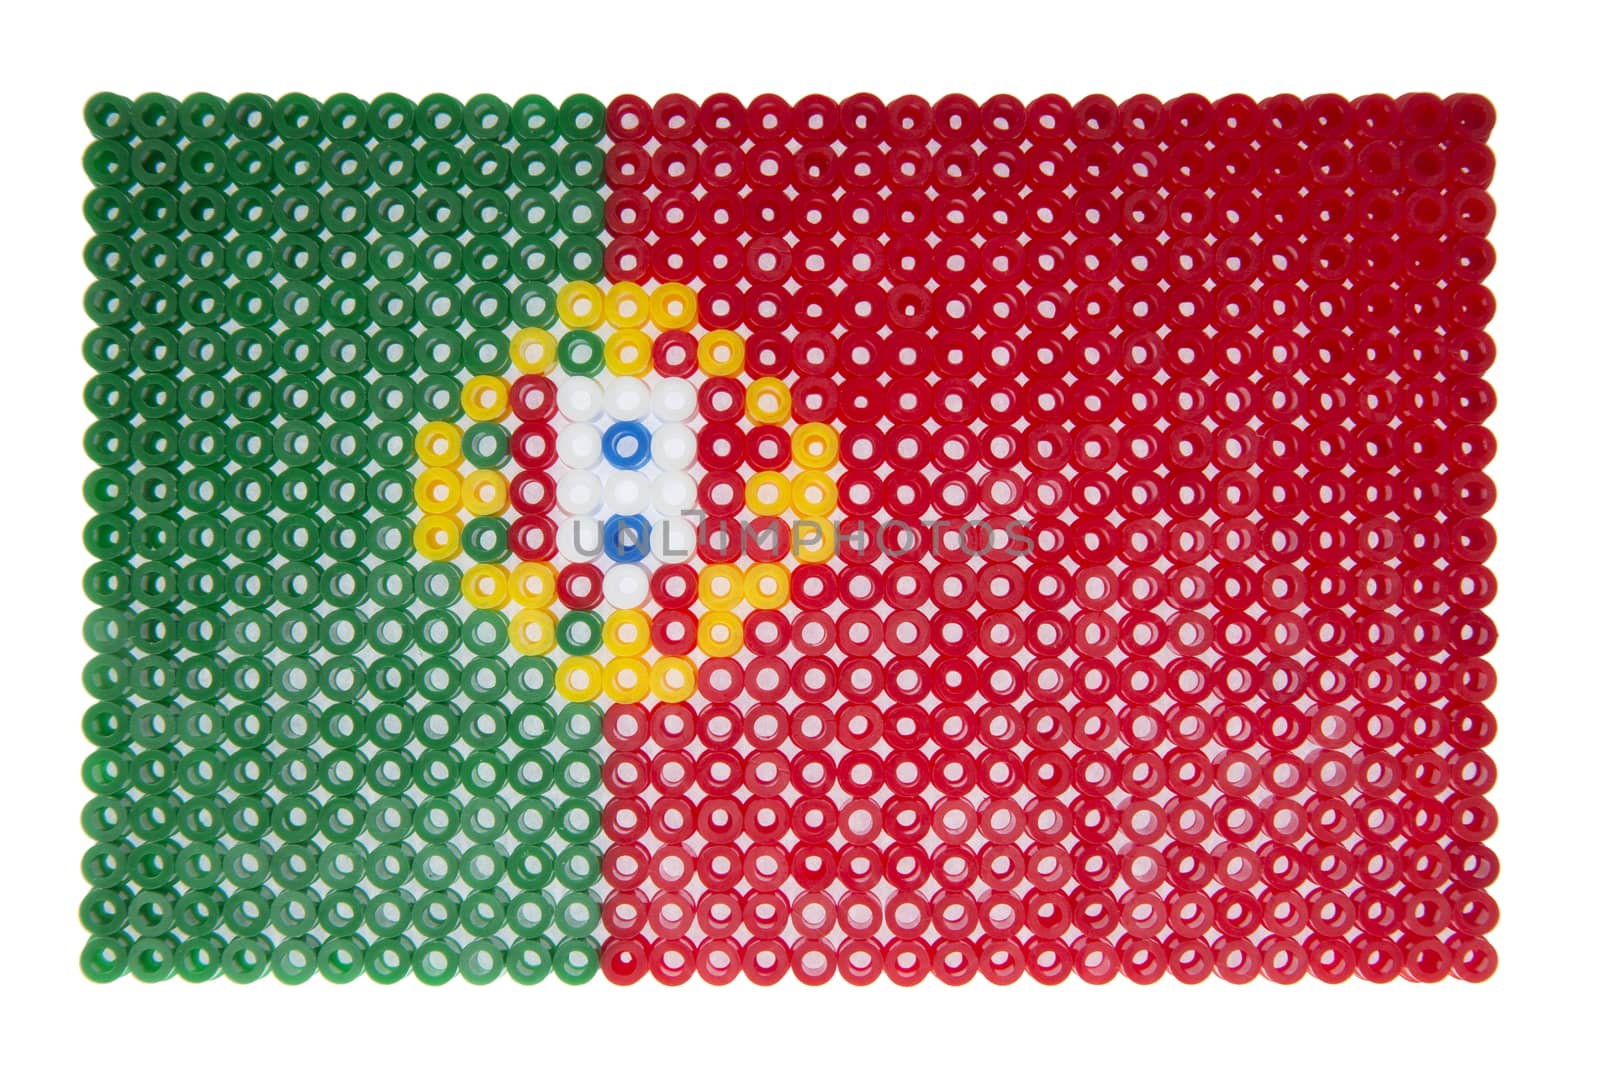 Portoguese Flag by gemenacom